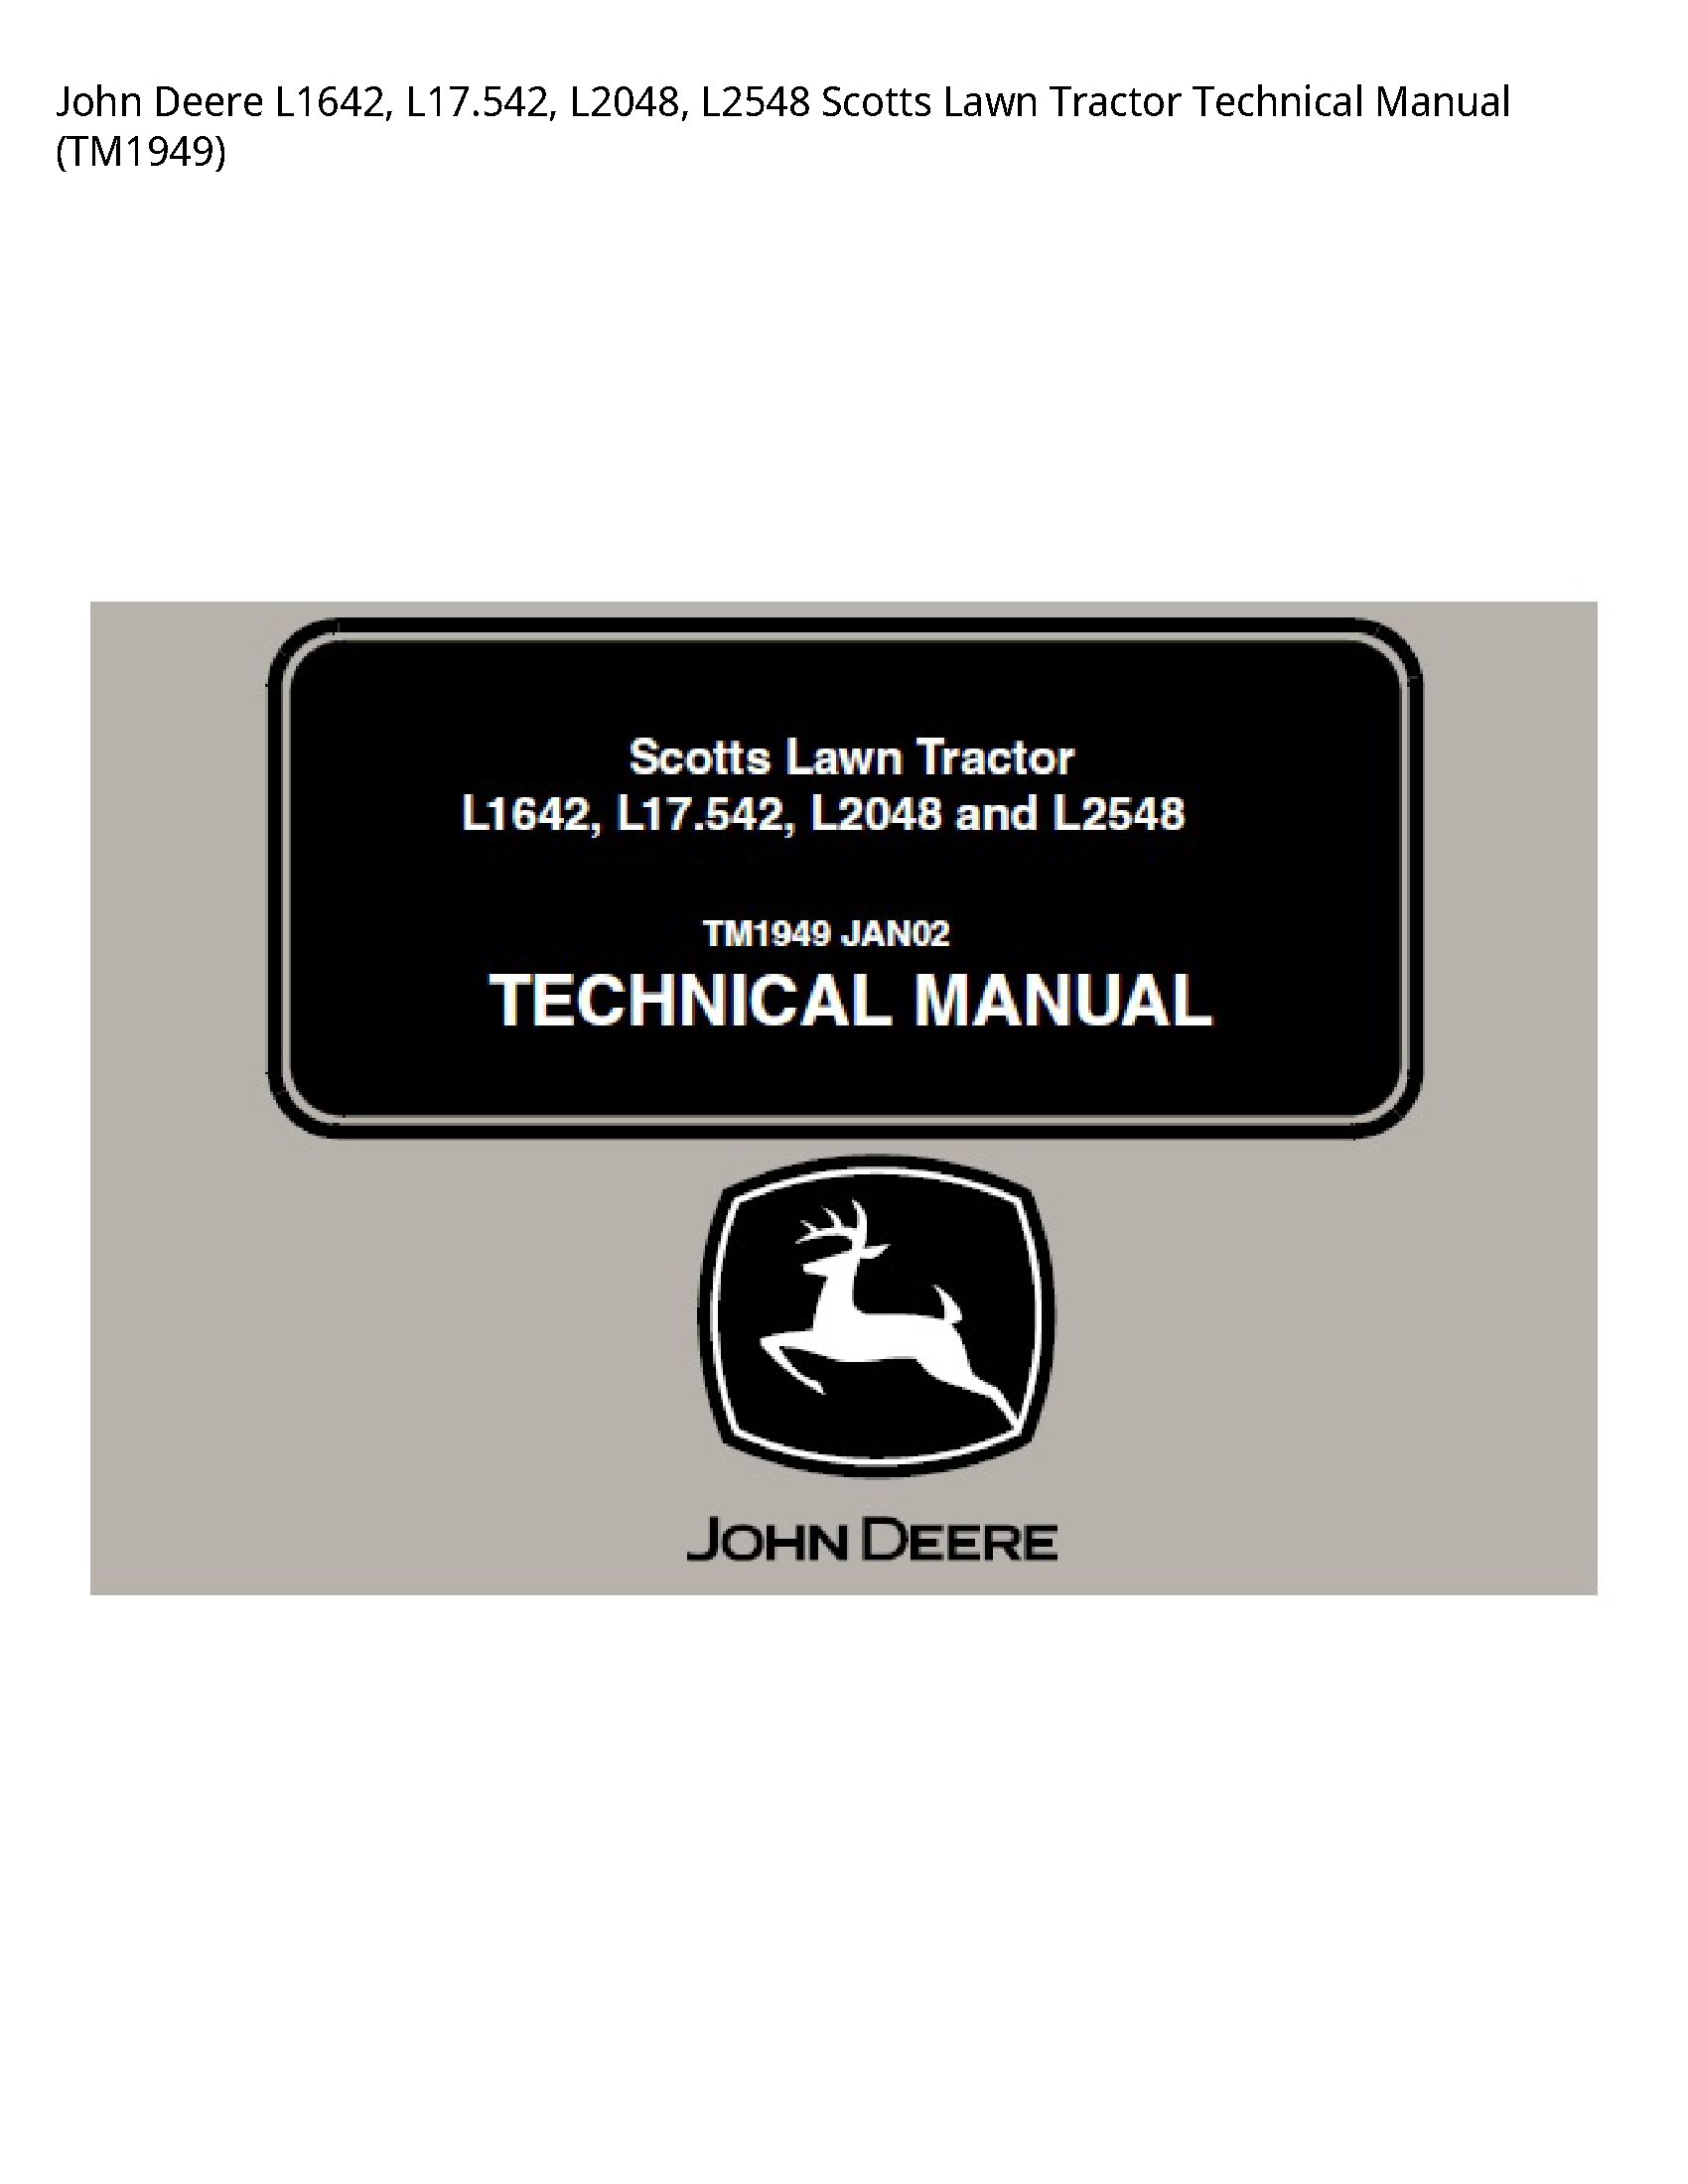 John Deere L1642 Scotts Lawn Tractor Technical manual